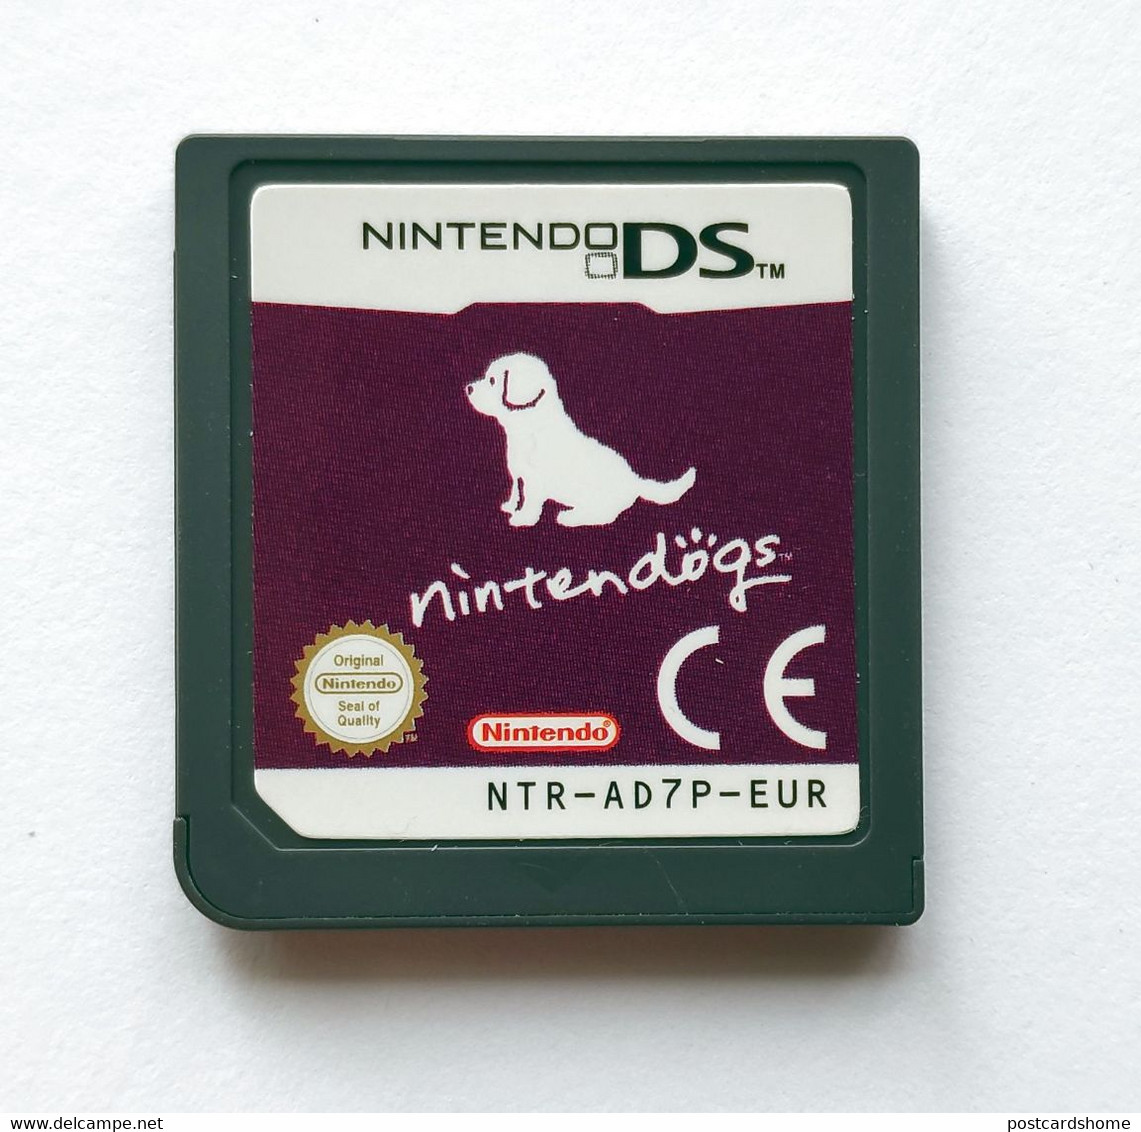 Nintendo DS Nintendogs: Dalmatian and Friends.  EUR